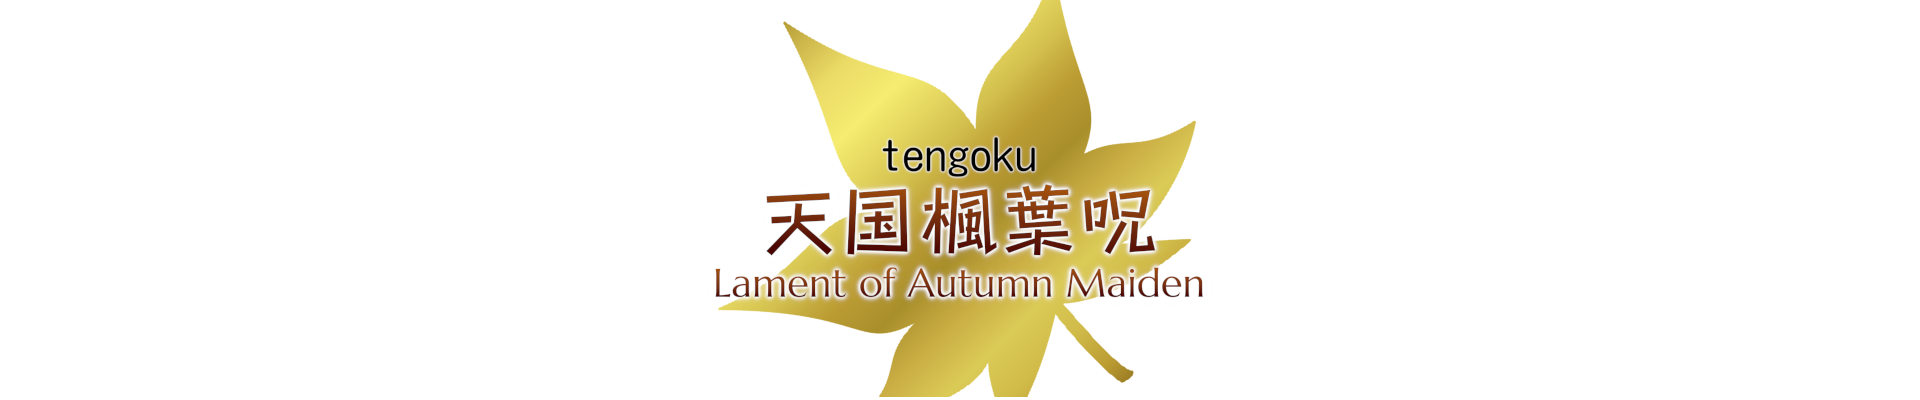 Tengoku 3: 楓葉呪 〜 Lament of Autumn Maiden